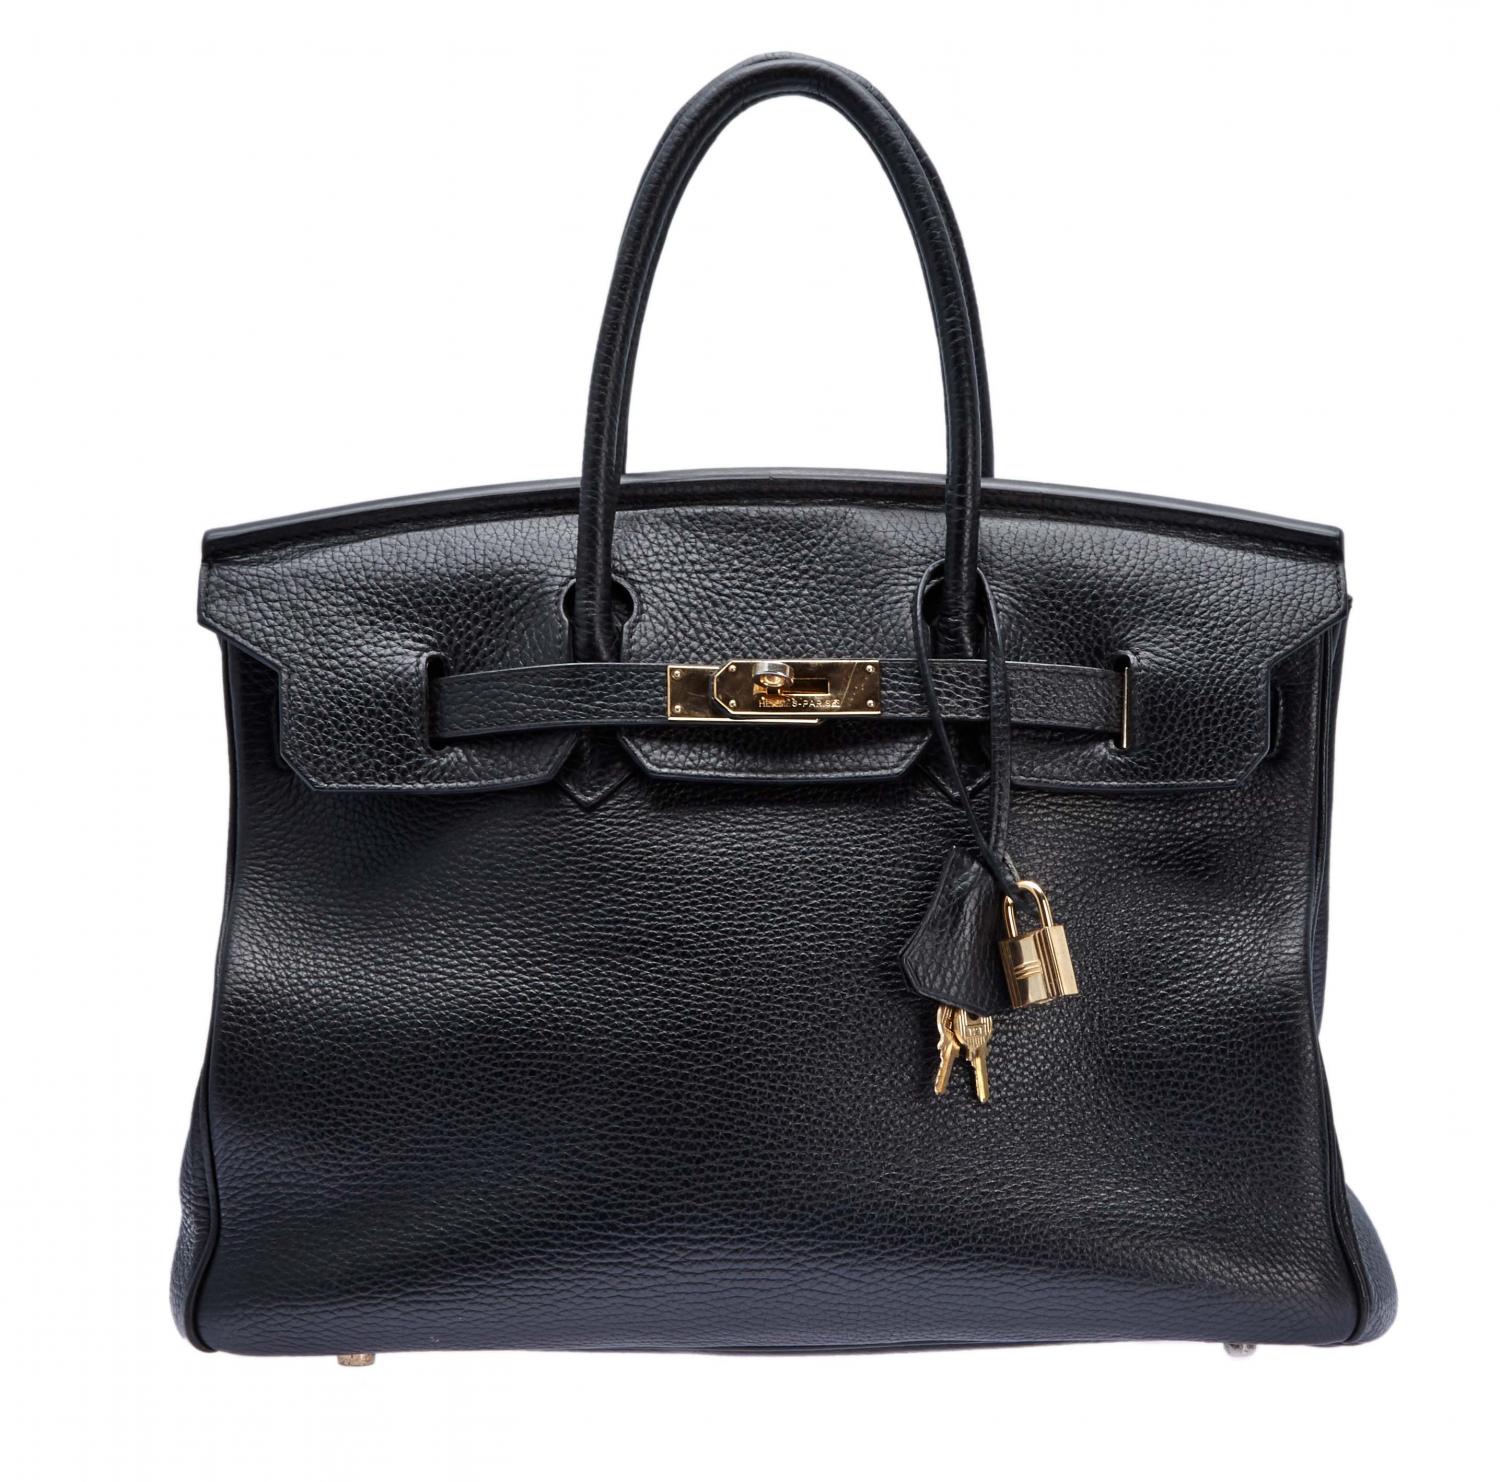 Hermes Birkin Handbag - Price Estimate: $8000 - $10000